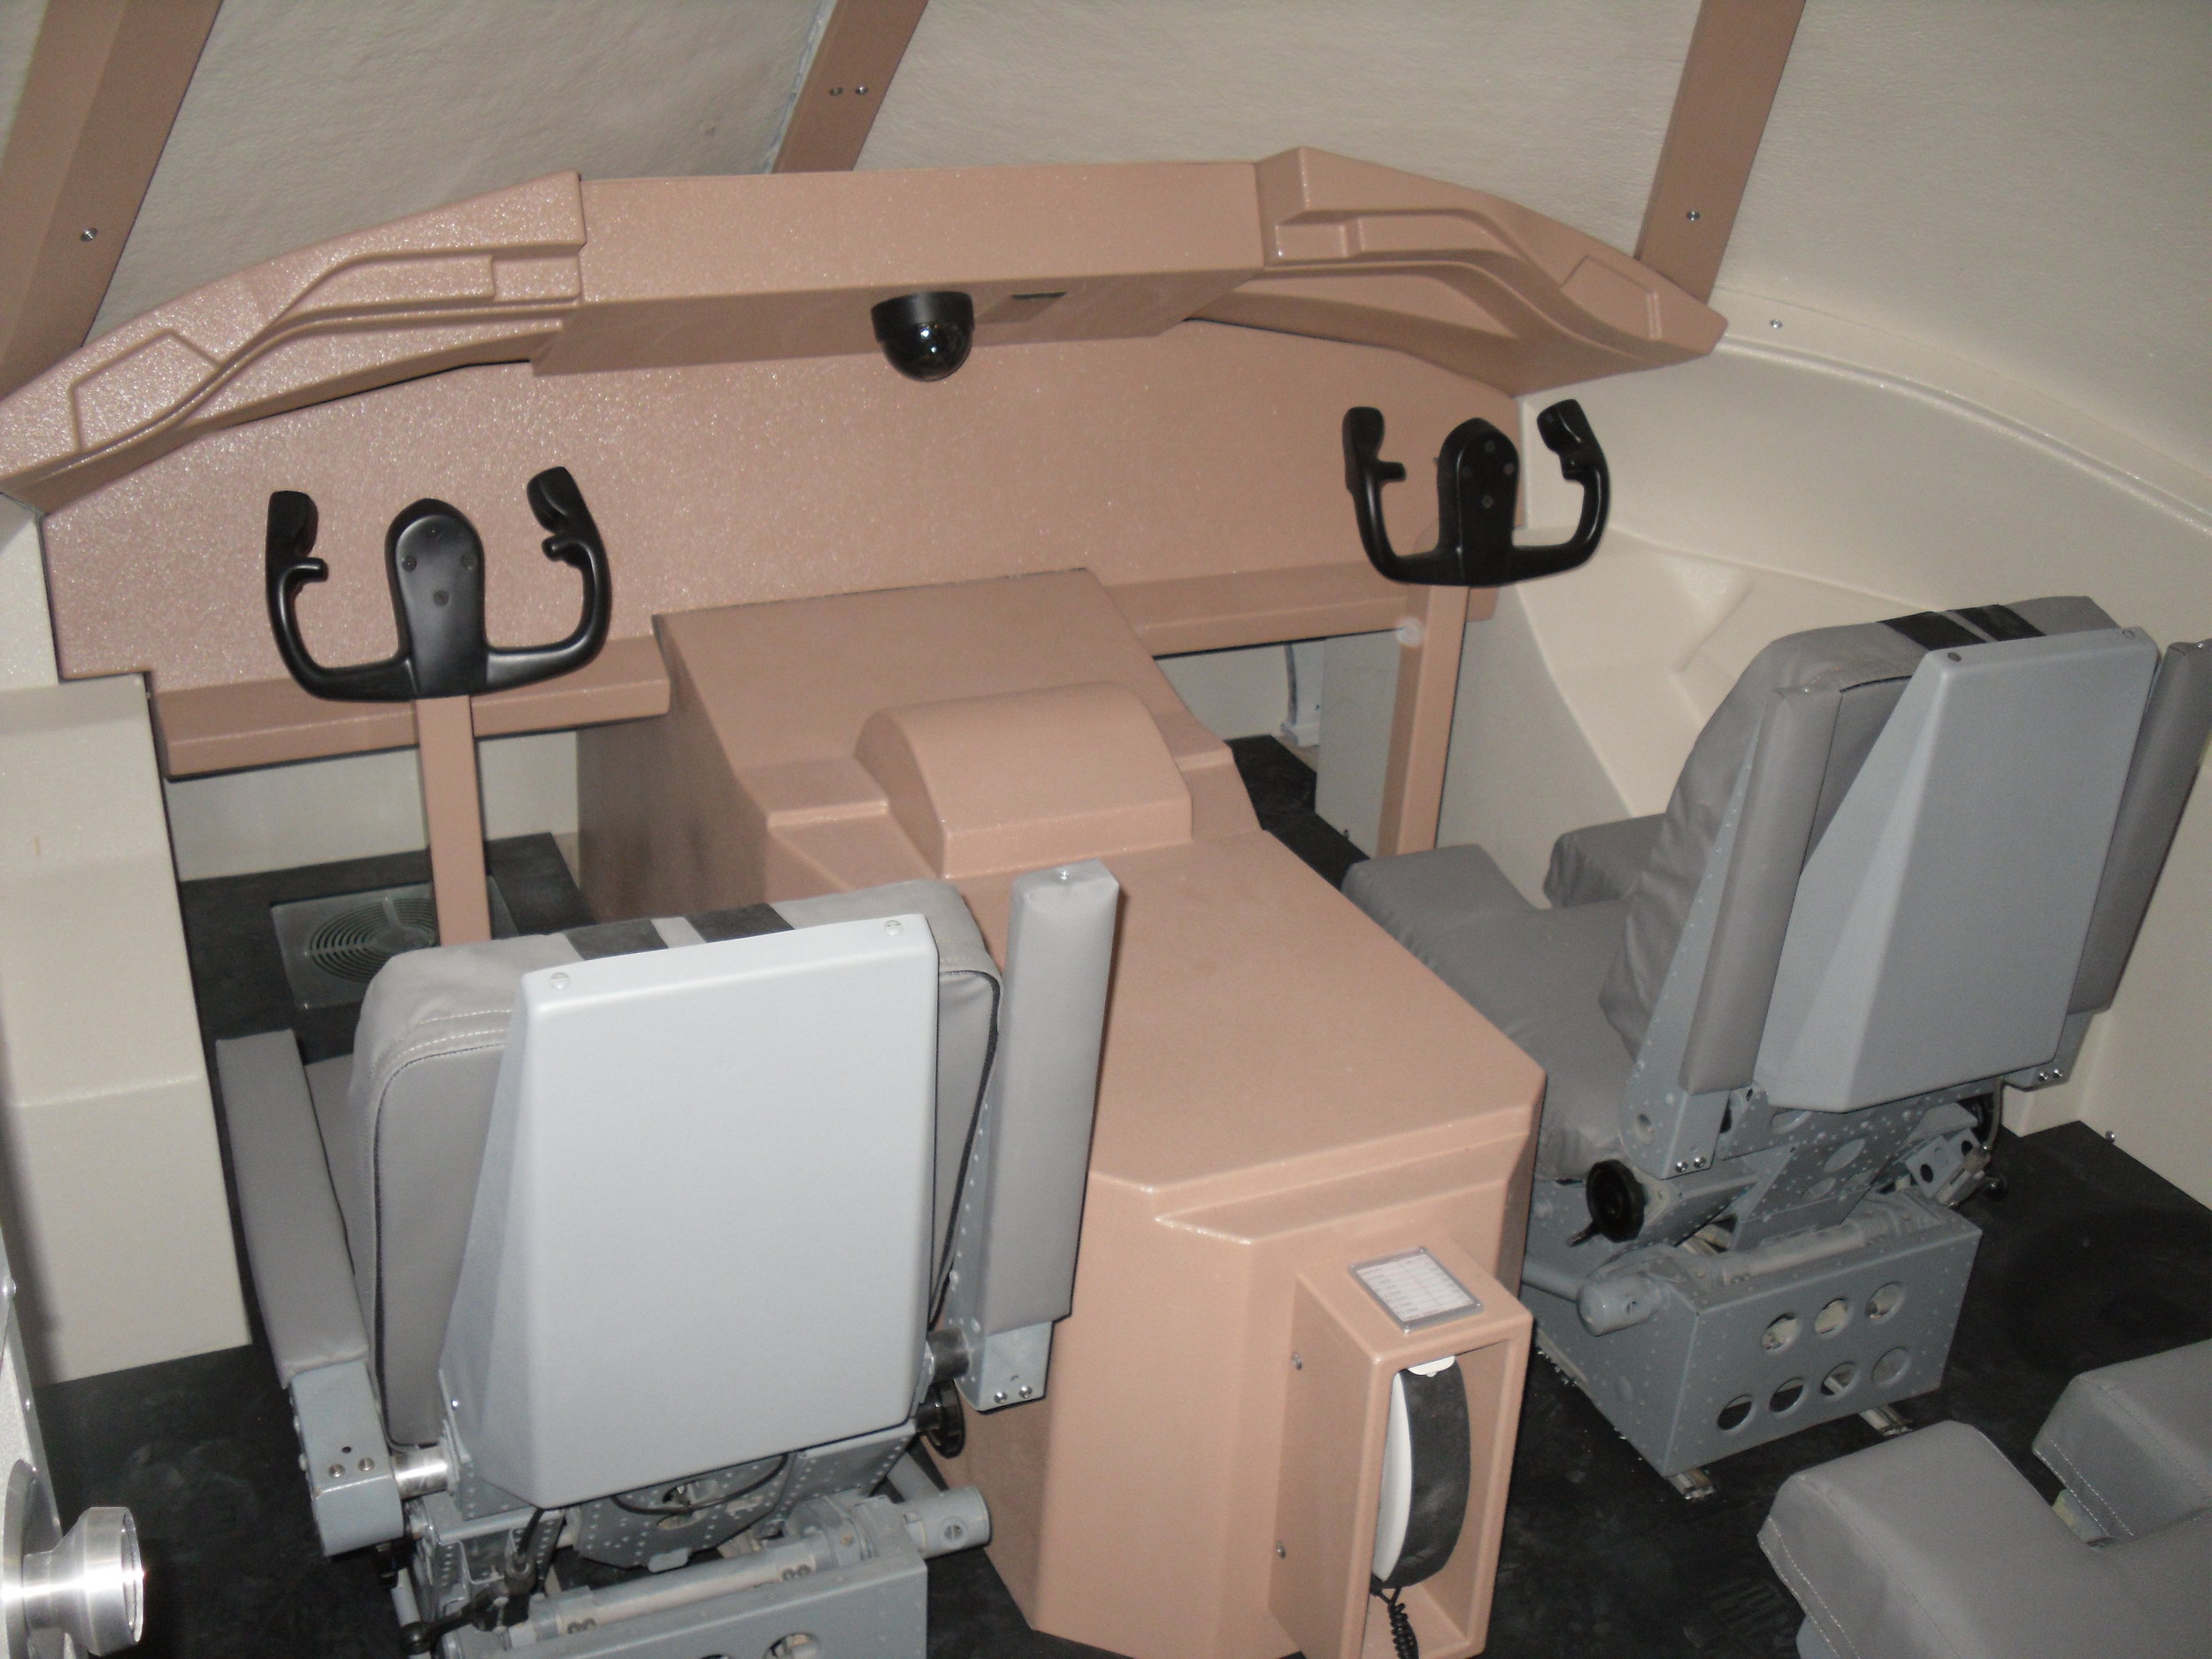 Flight Deck Security Training Simulator